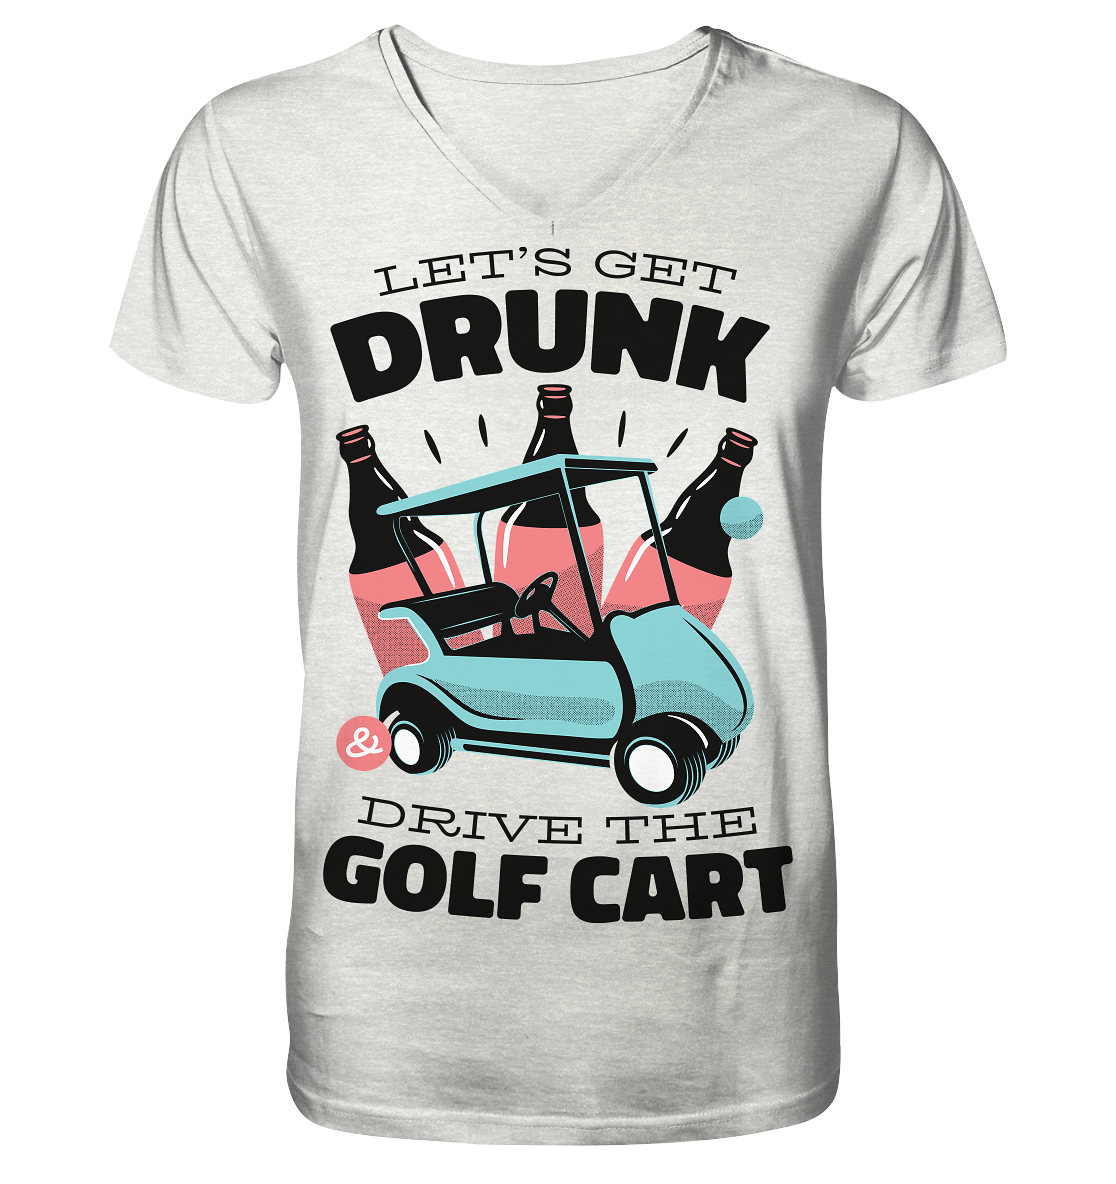 Let's get drunk drive the golf cart - Men's Organic V-Neck Shirt